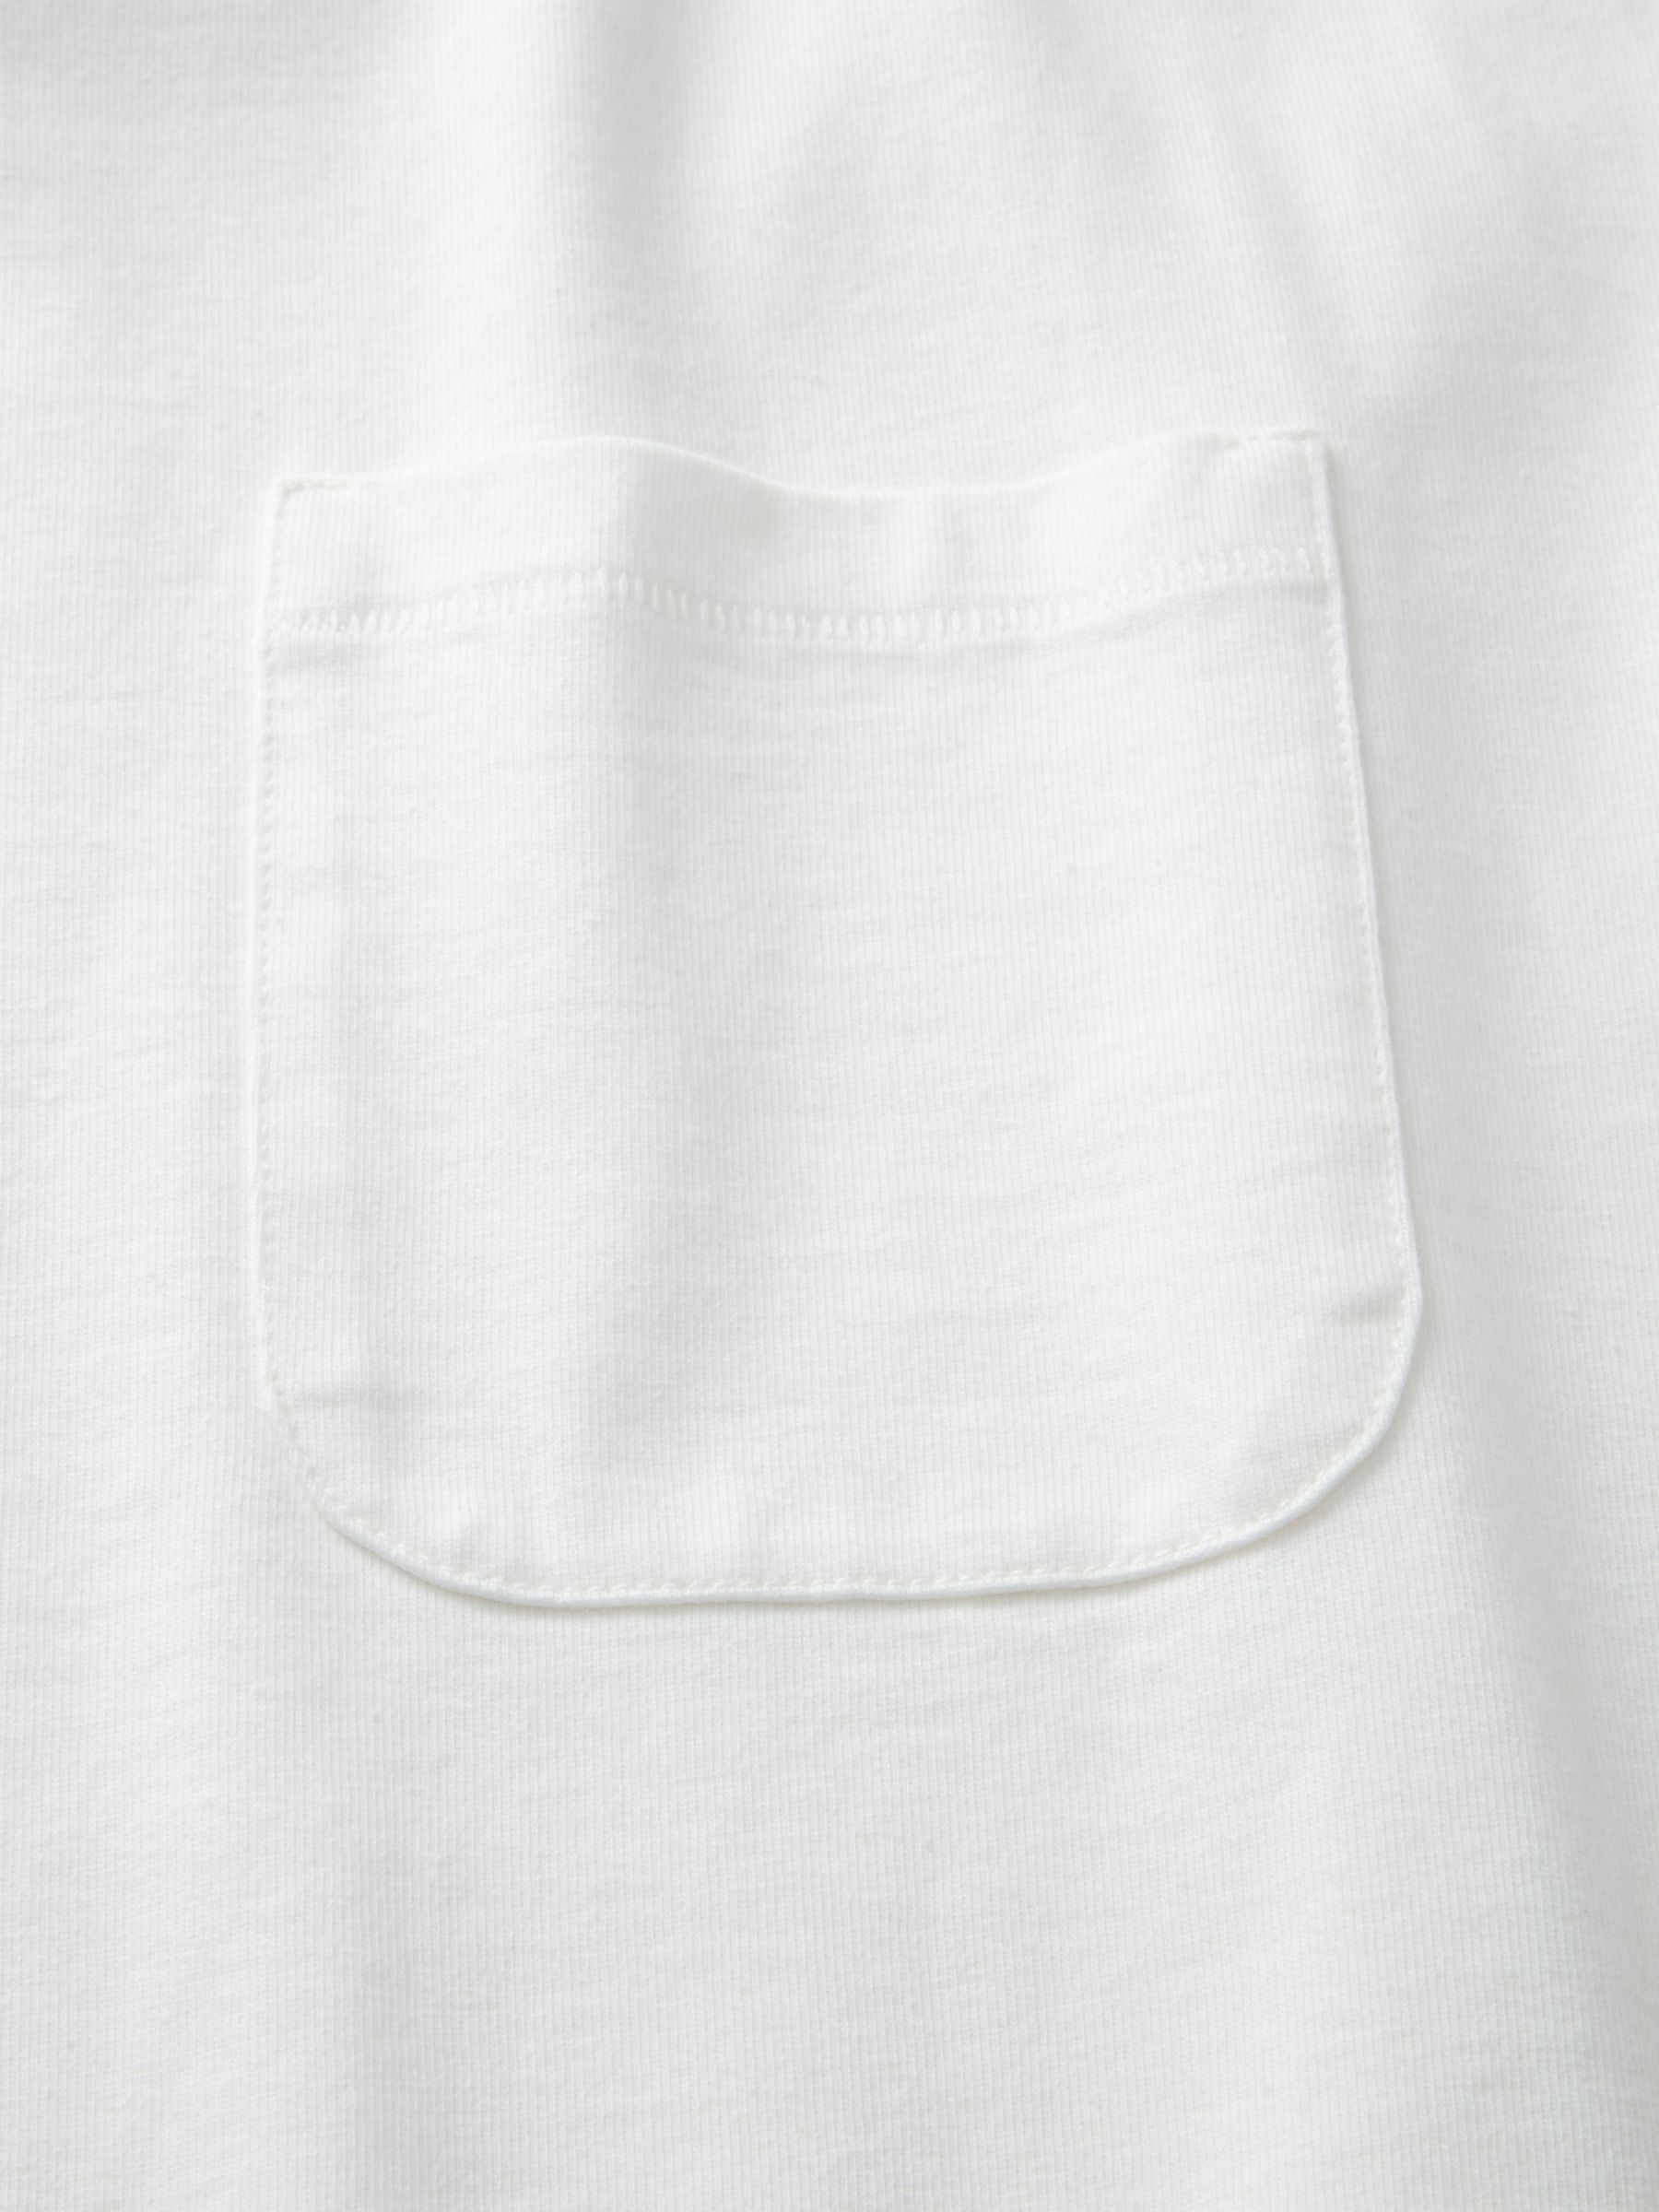 Aubin Newburgh Relaxed Pocket T-Shirt, Chalk White, S